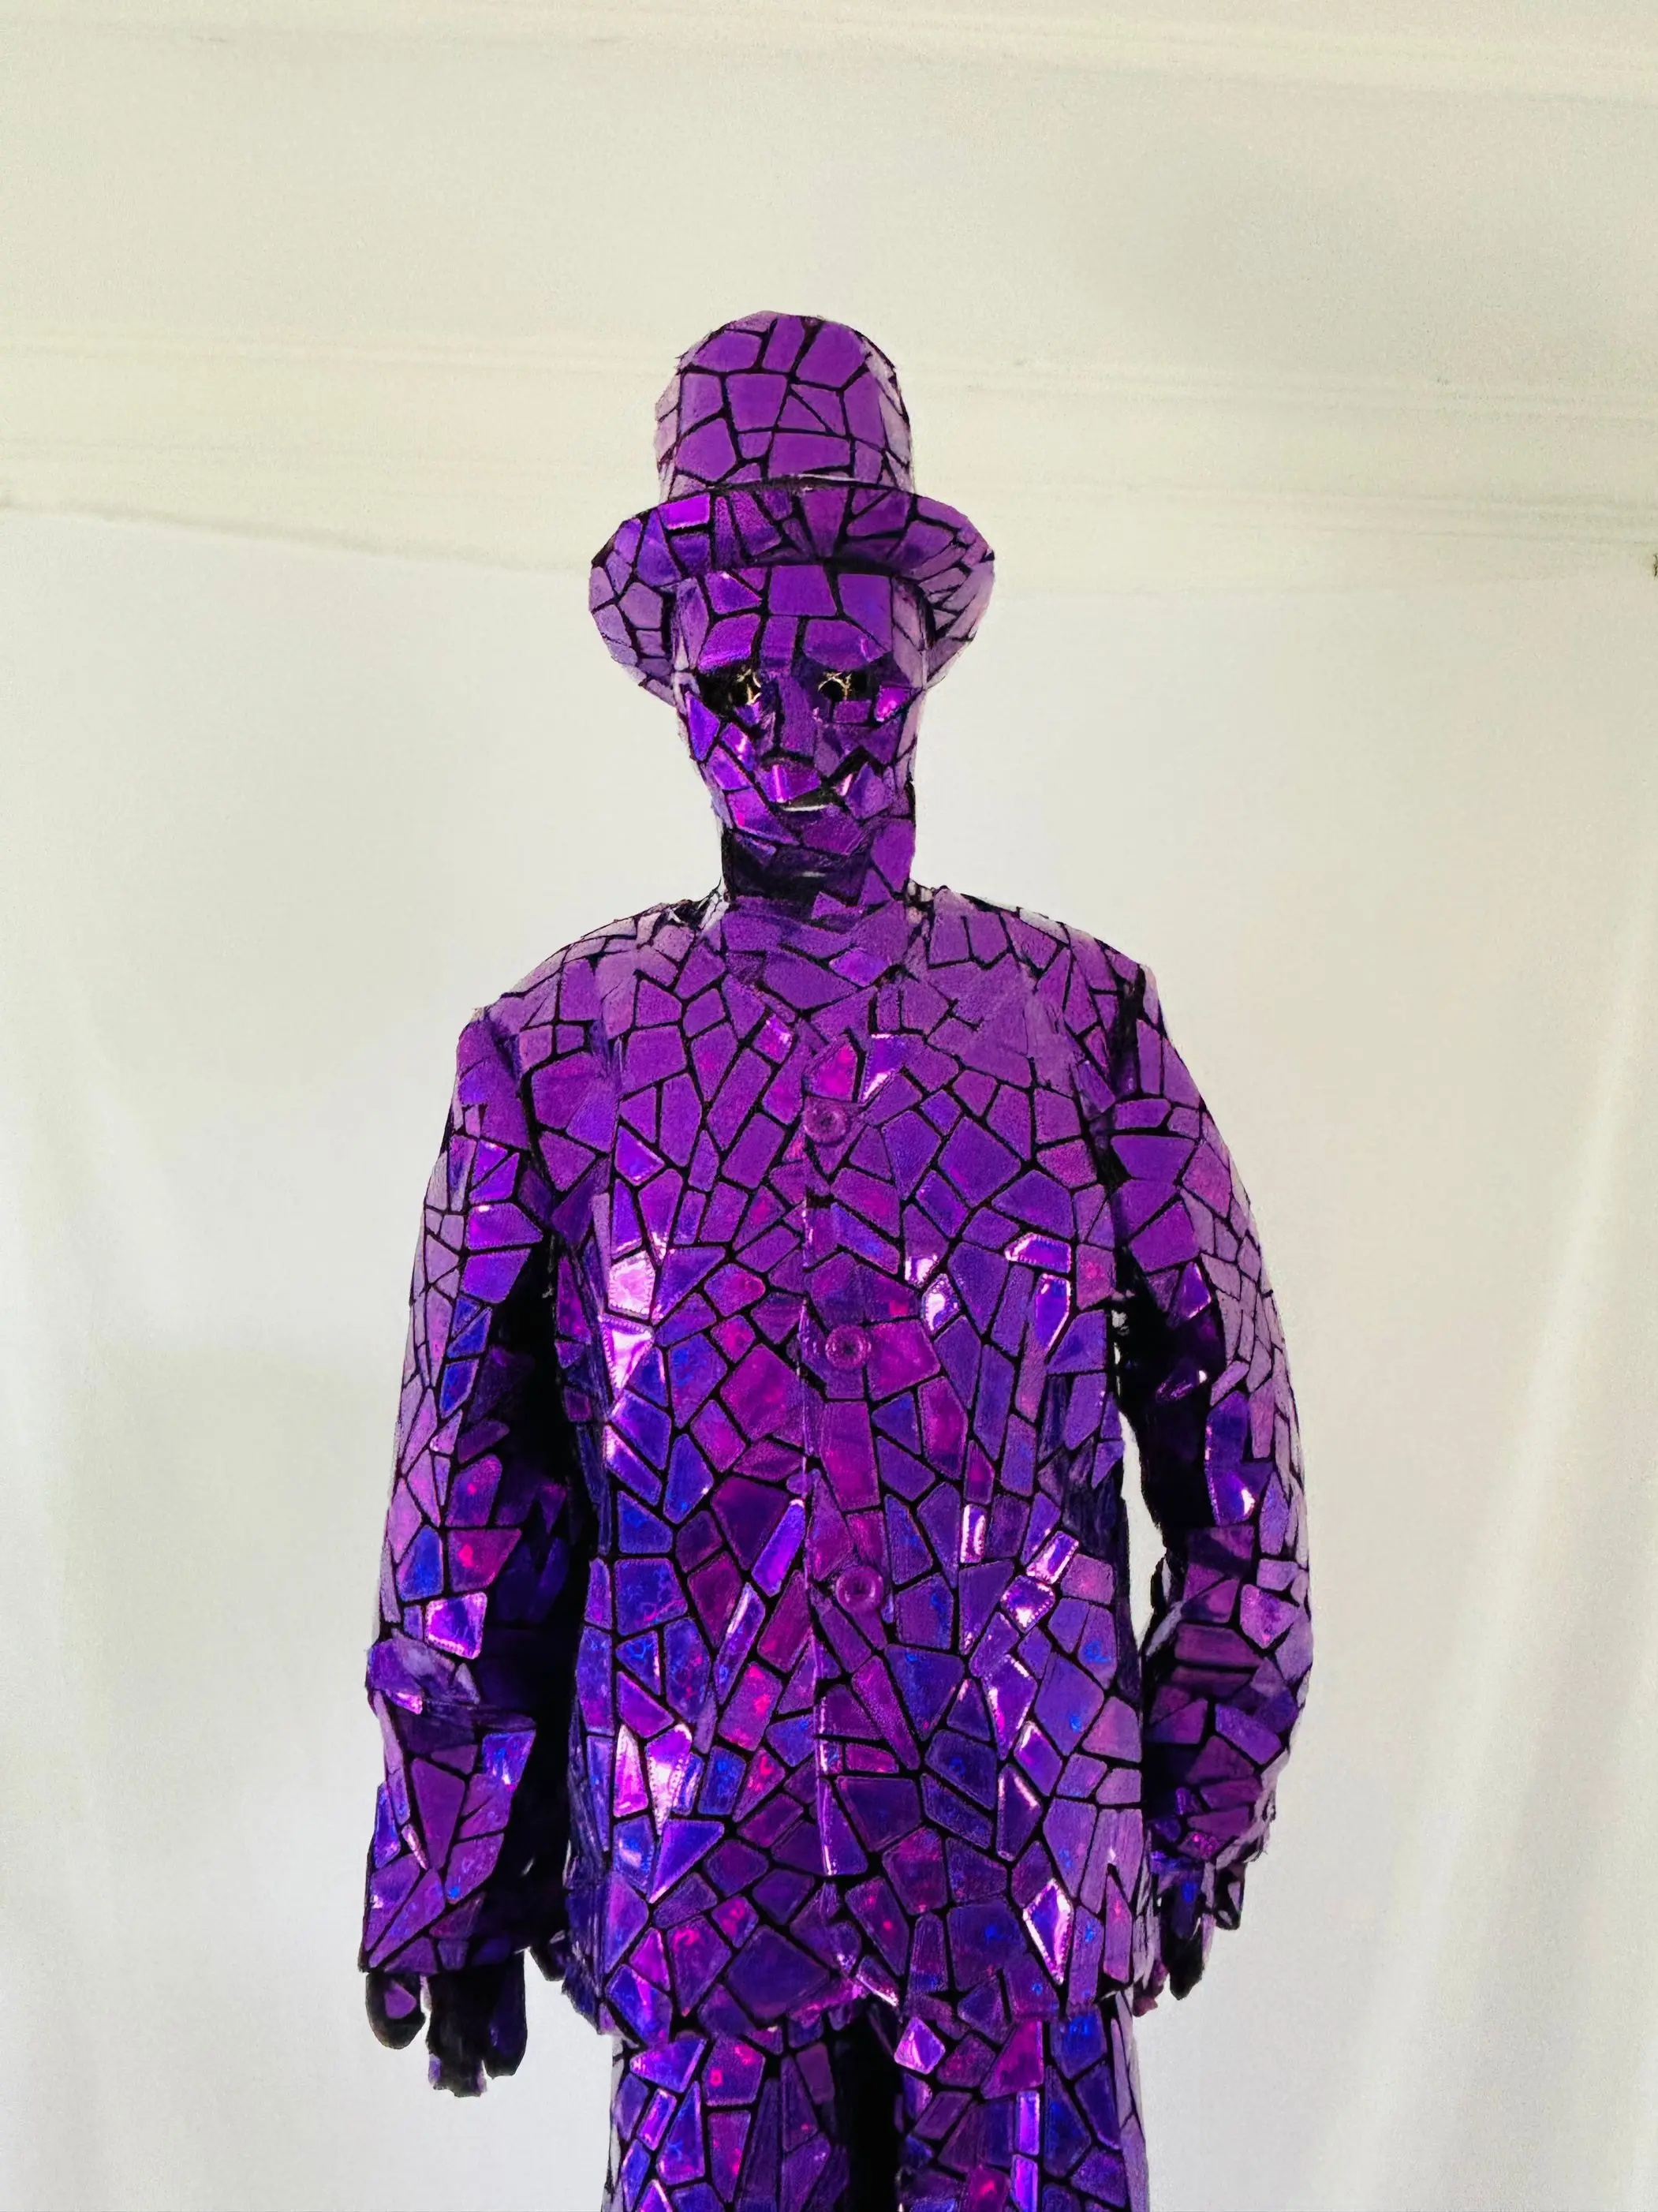 

Metallic Purple Similiar Mirror Material Stilts Walker Robot Suit Costume Clothes Stage Show DJ Dancing Kryoman Giant Clothing